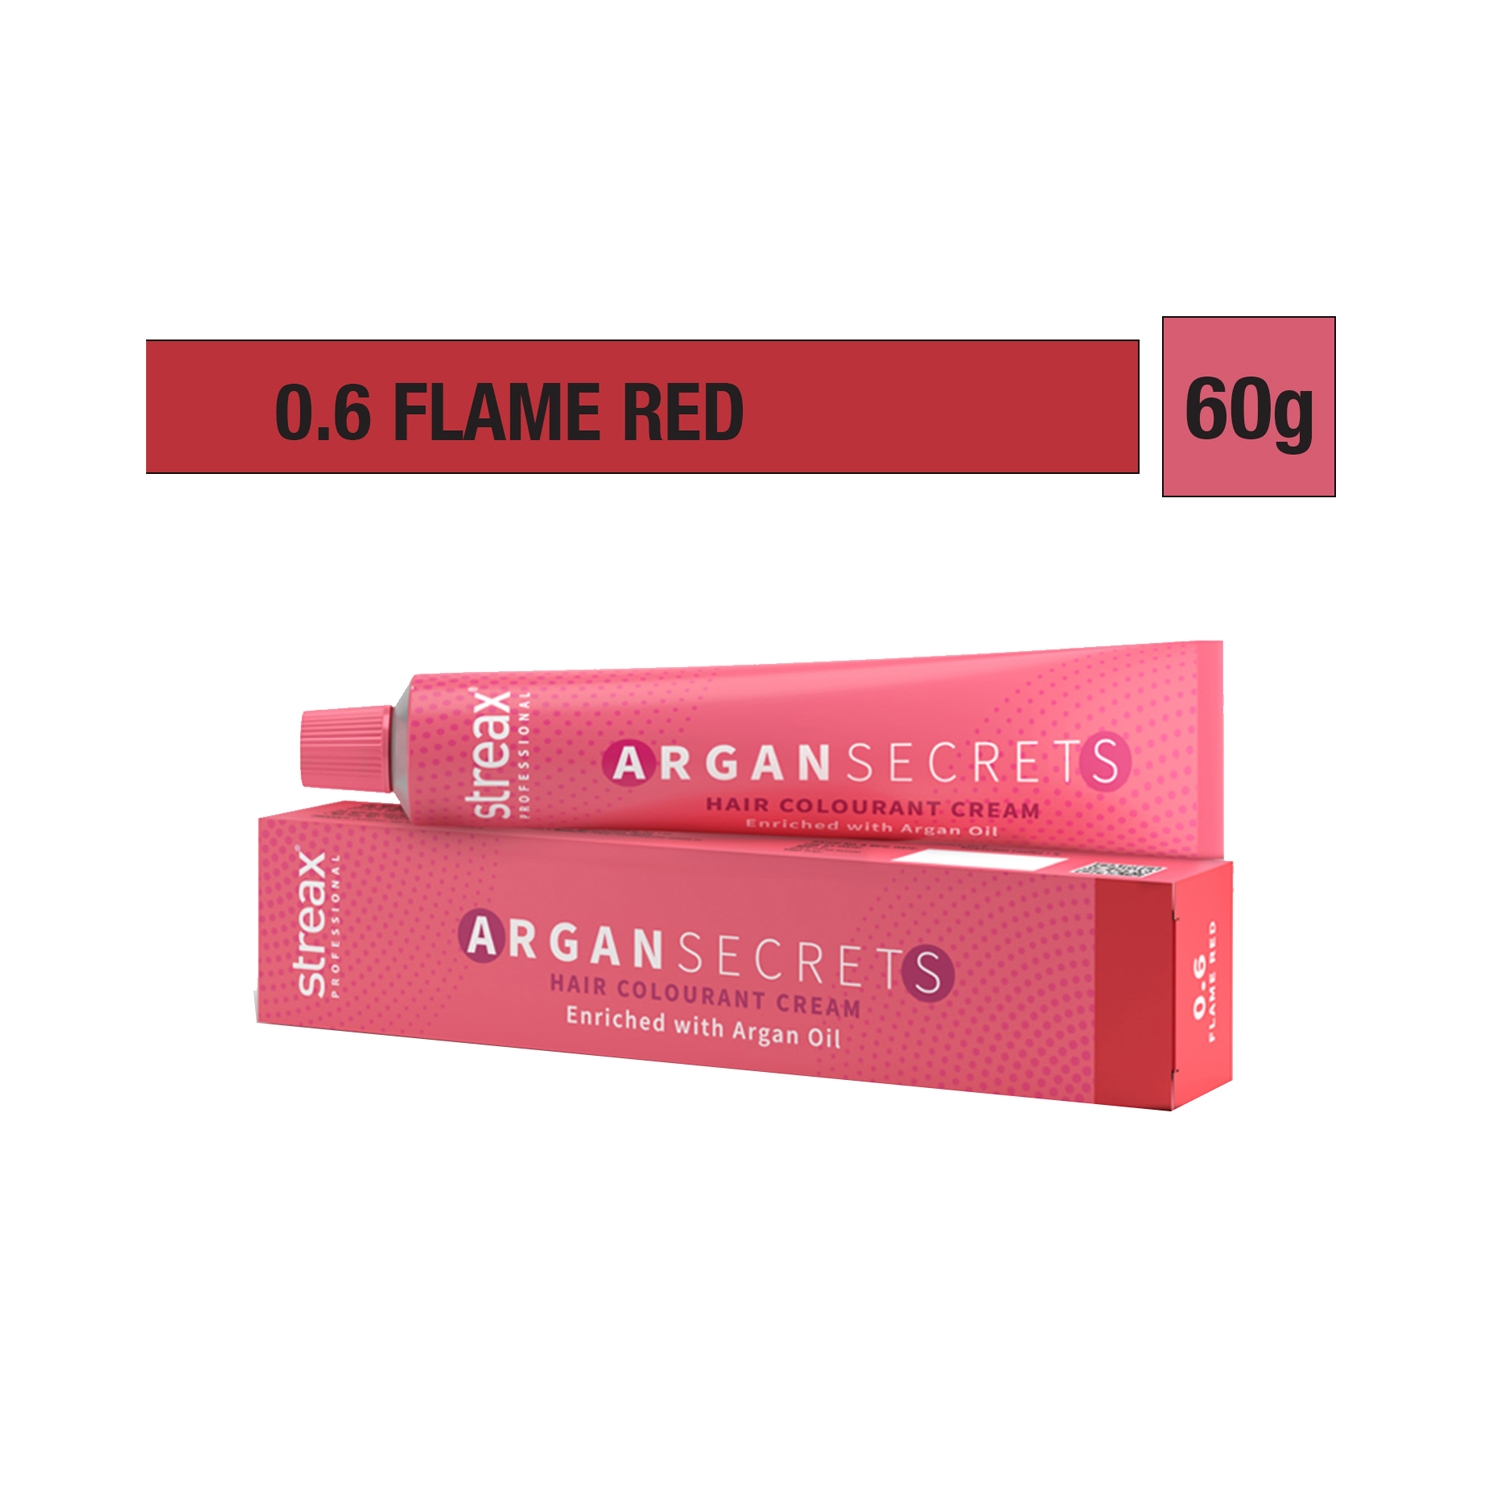 Streax Professional Argan Secrets Hair Colorant Cream - 0.6 Flame Red (60g)